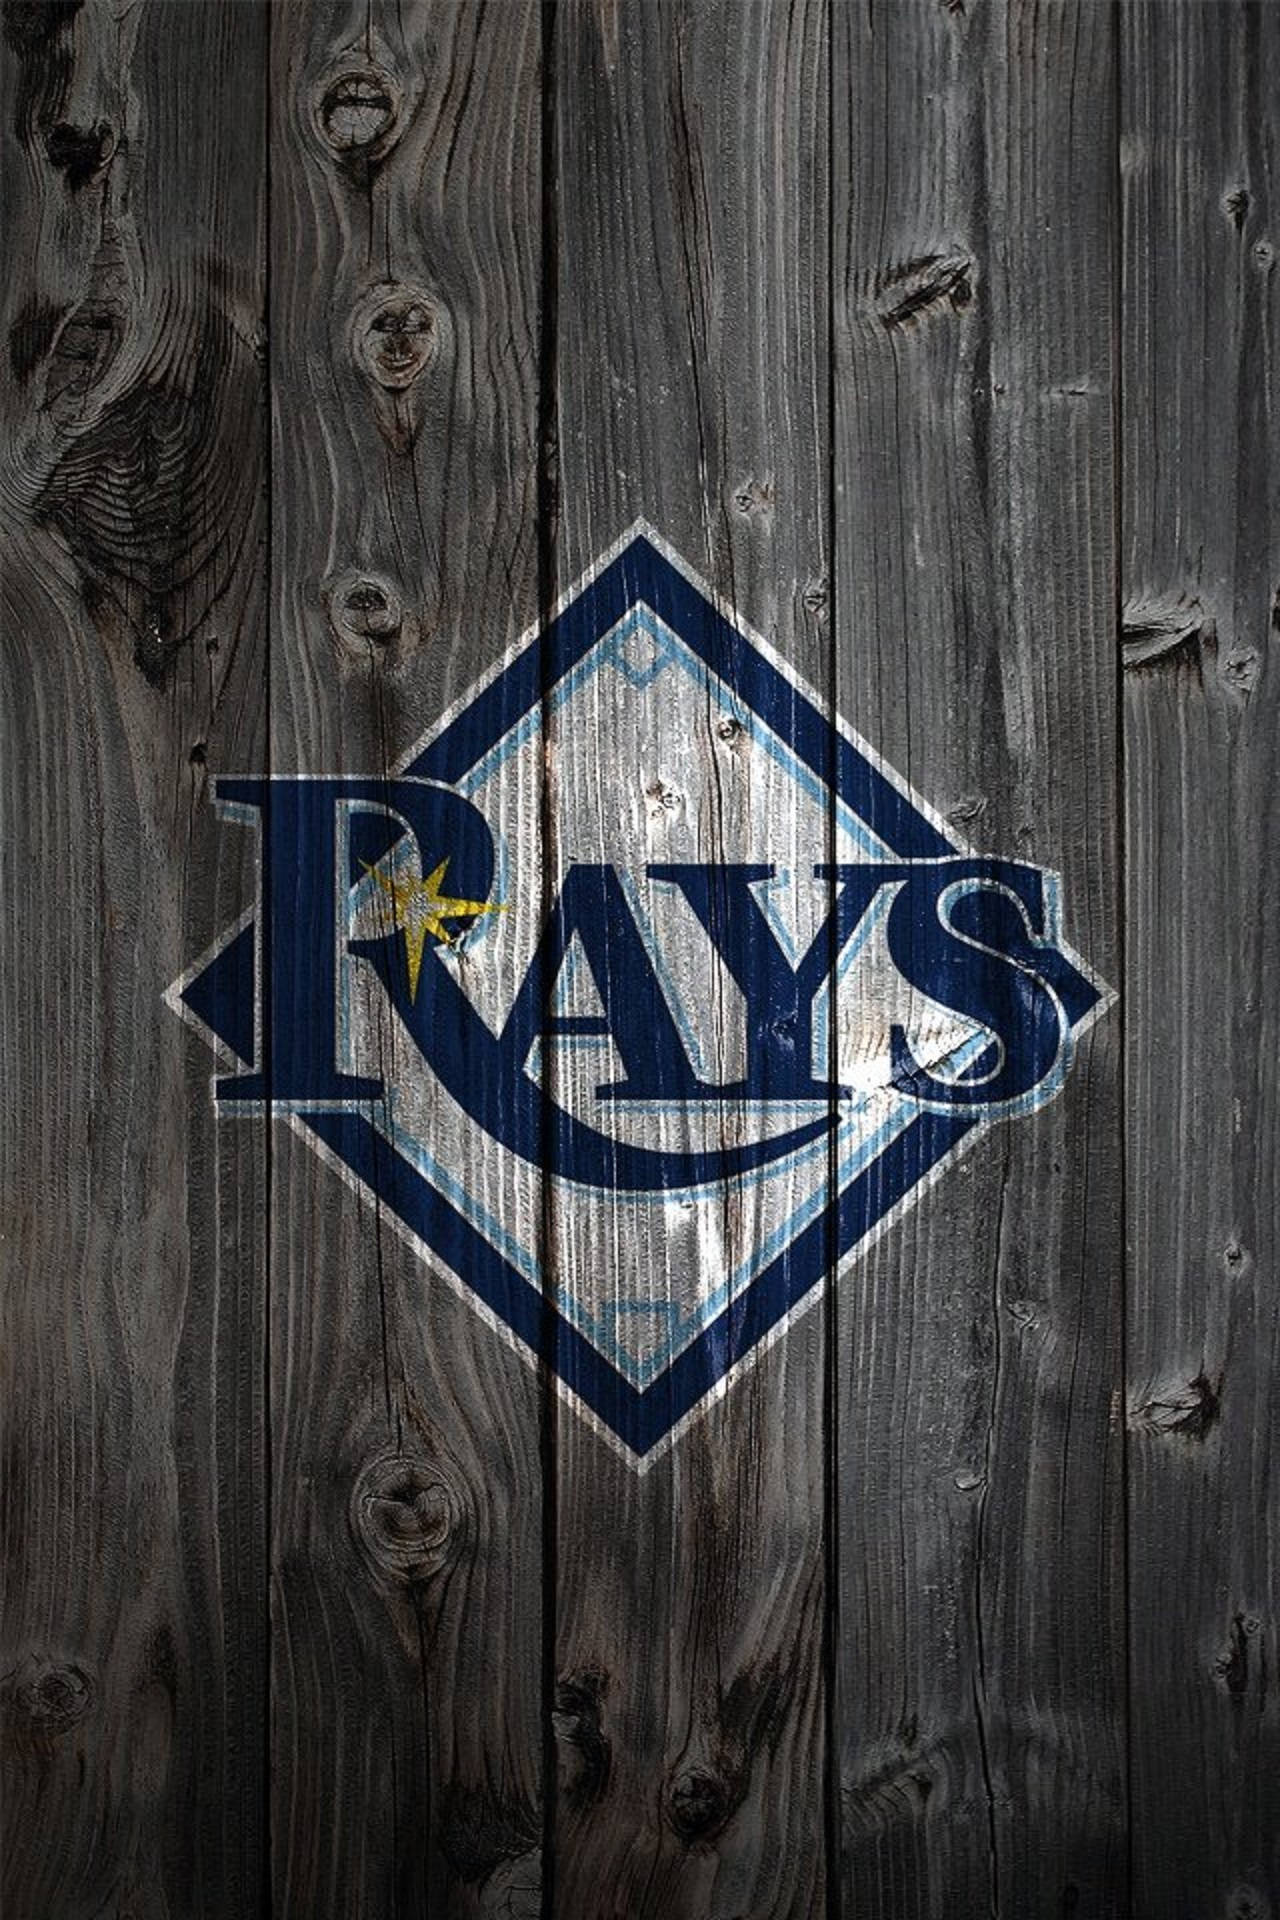 Tampa Bay Rays Emblem On Wood Background